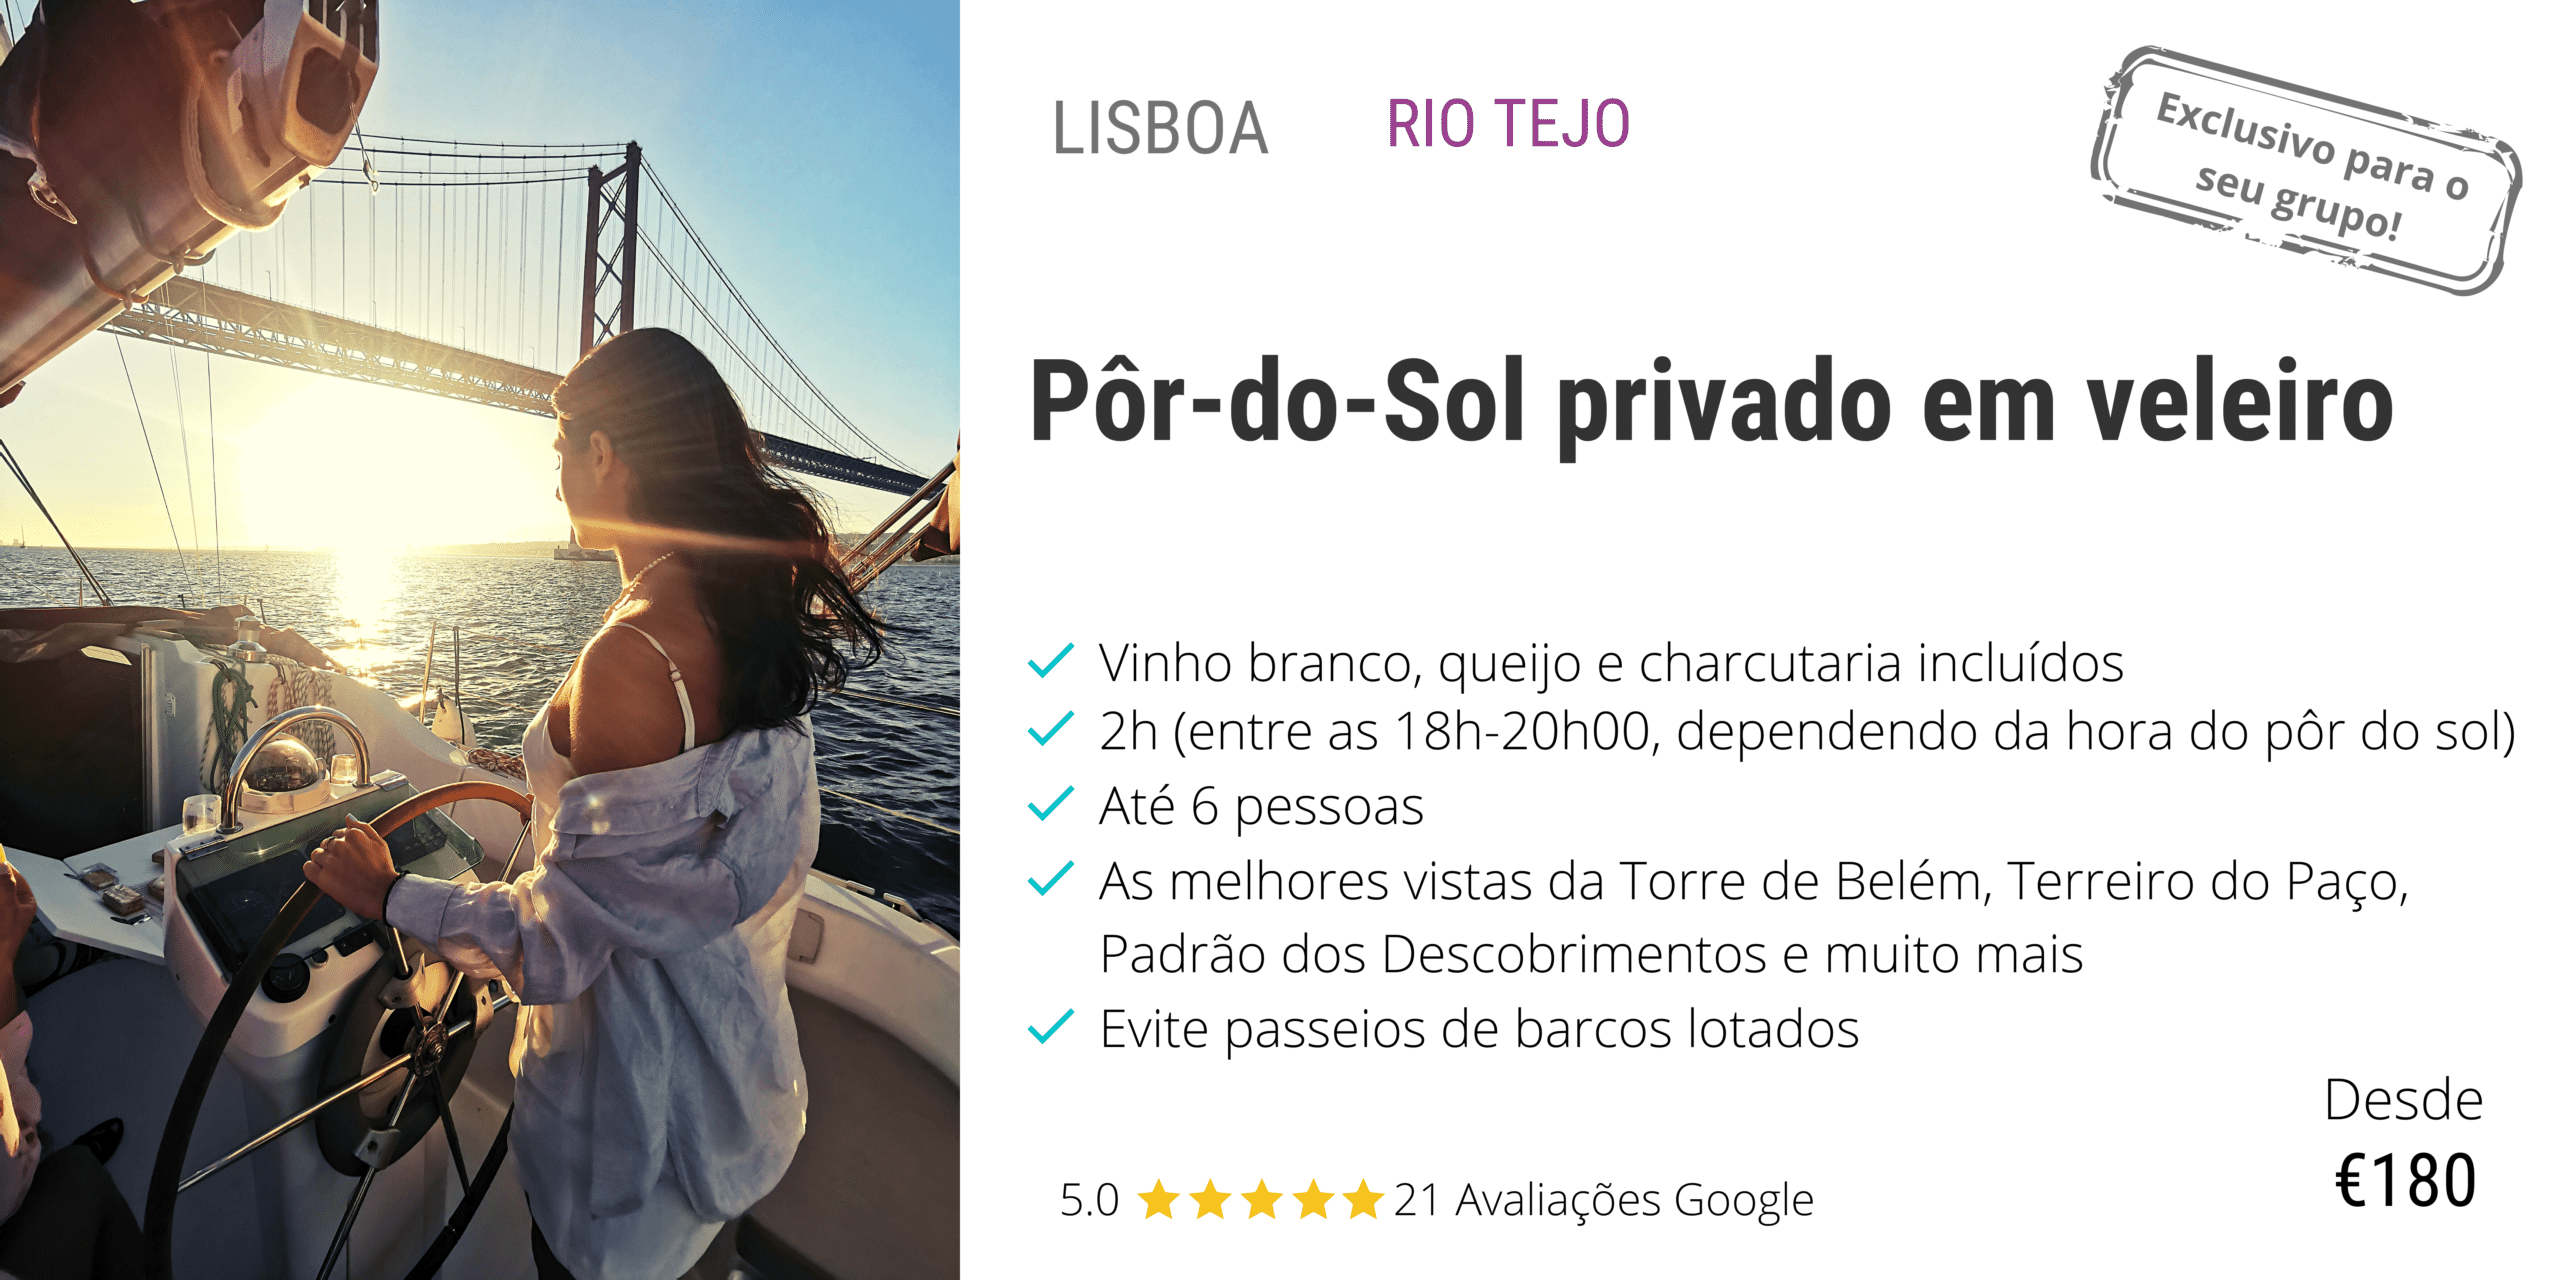 Lisboa Card Sailbythesea_EN